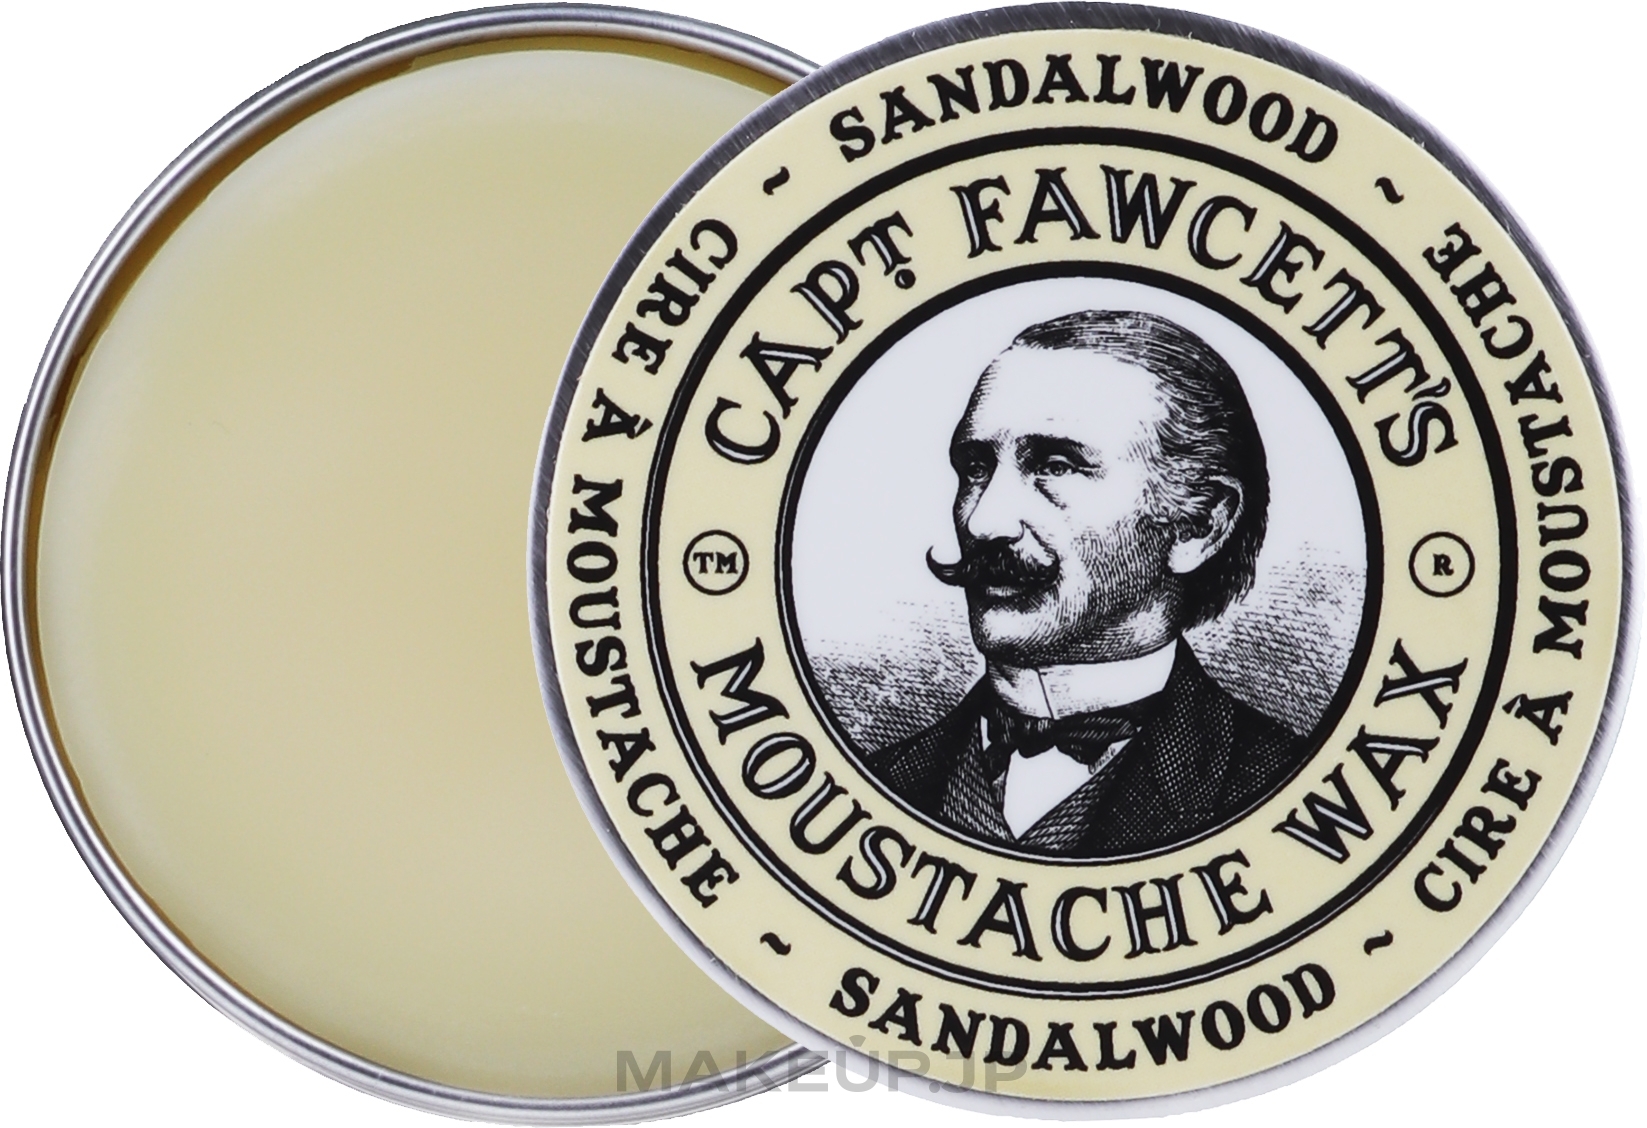 Moustache Wax - Captain Fawcett Sandalwood Moustache Wax — photo 15 ml